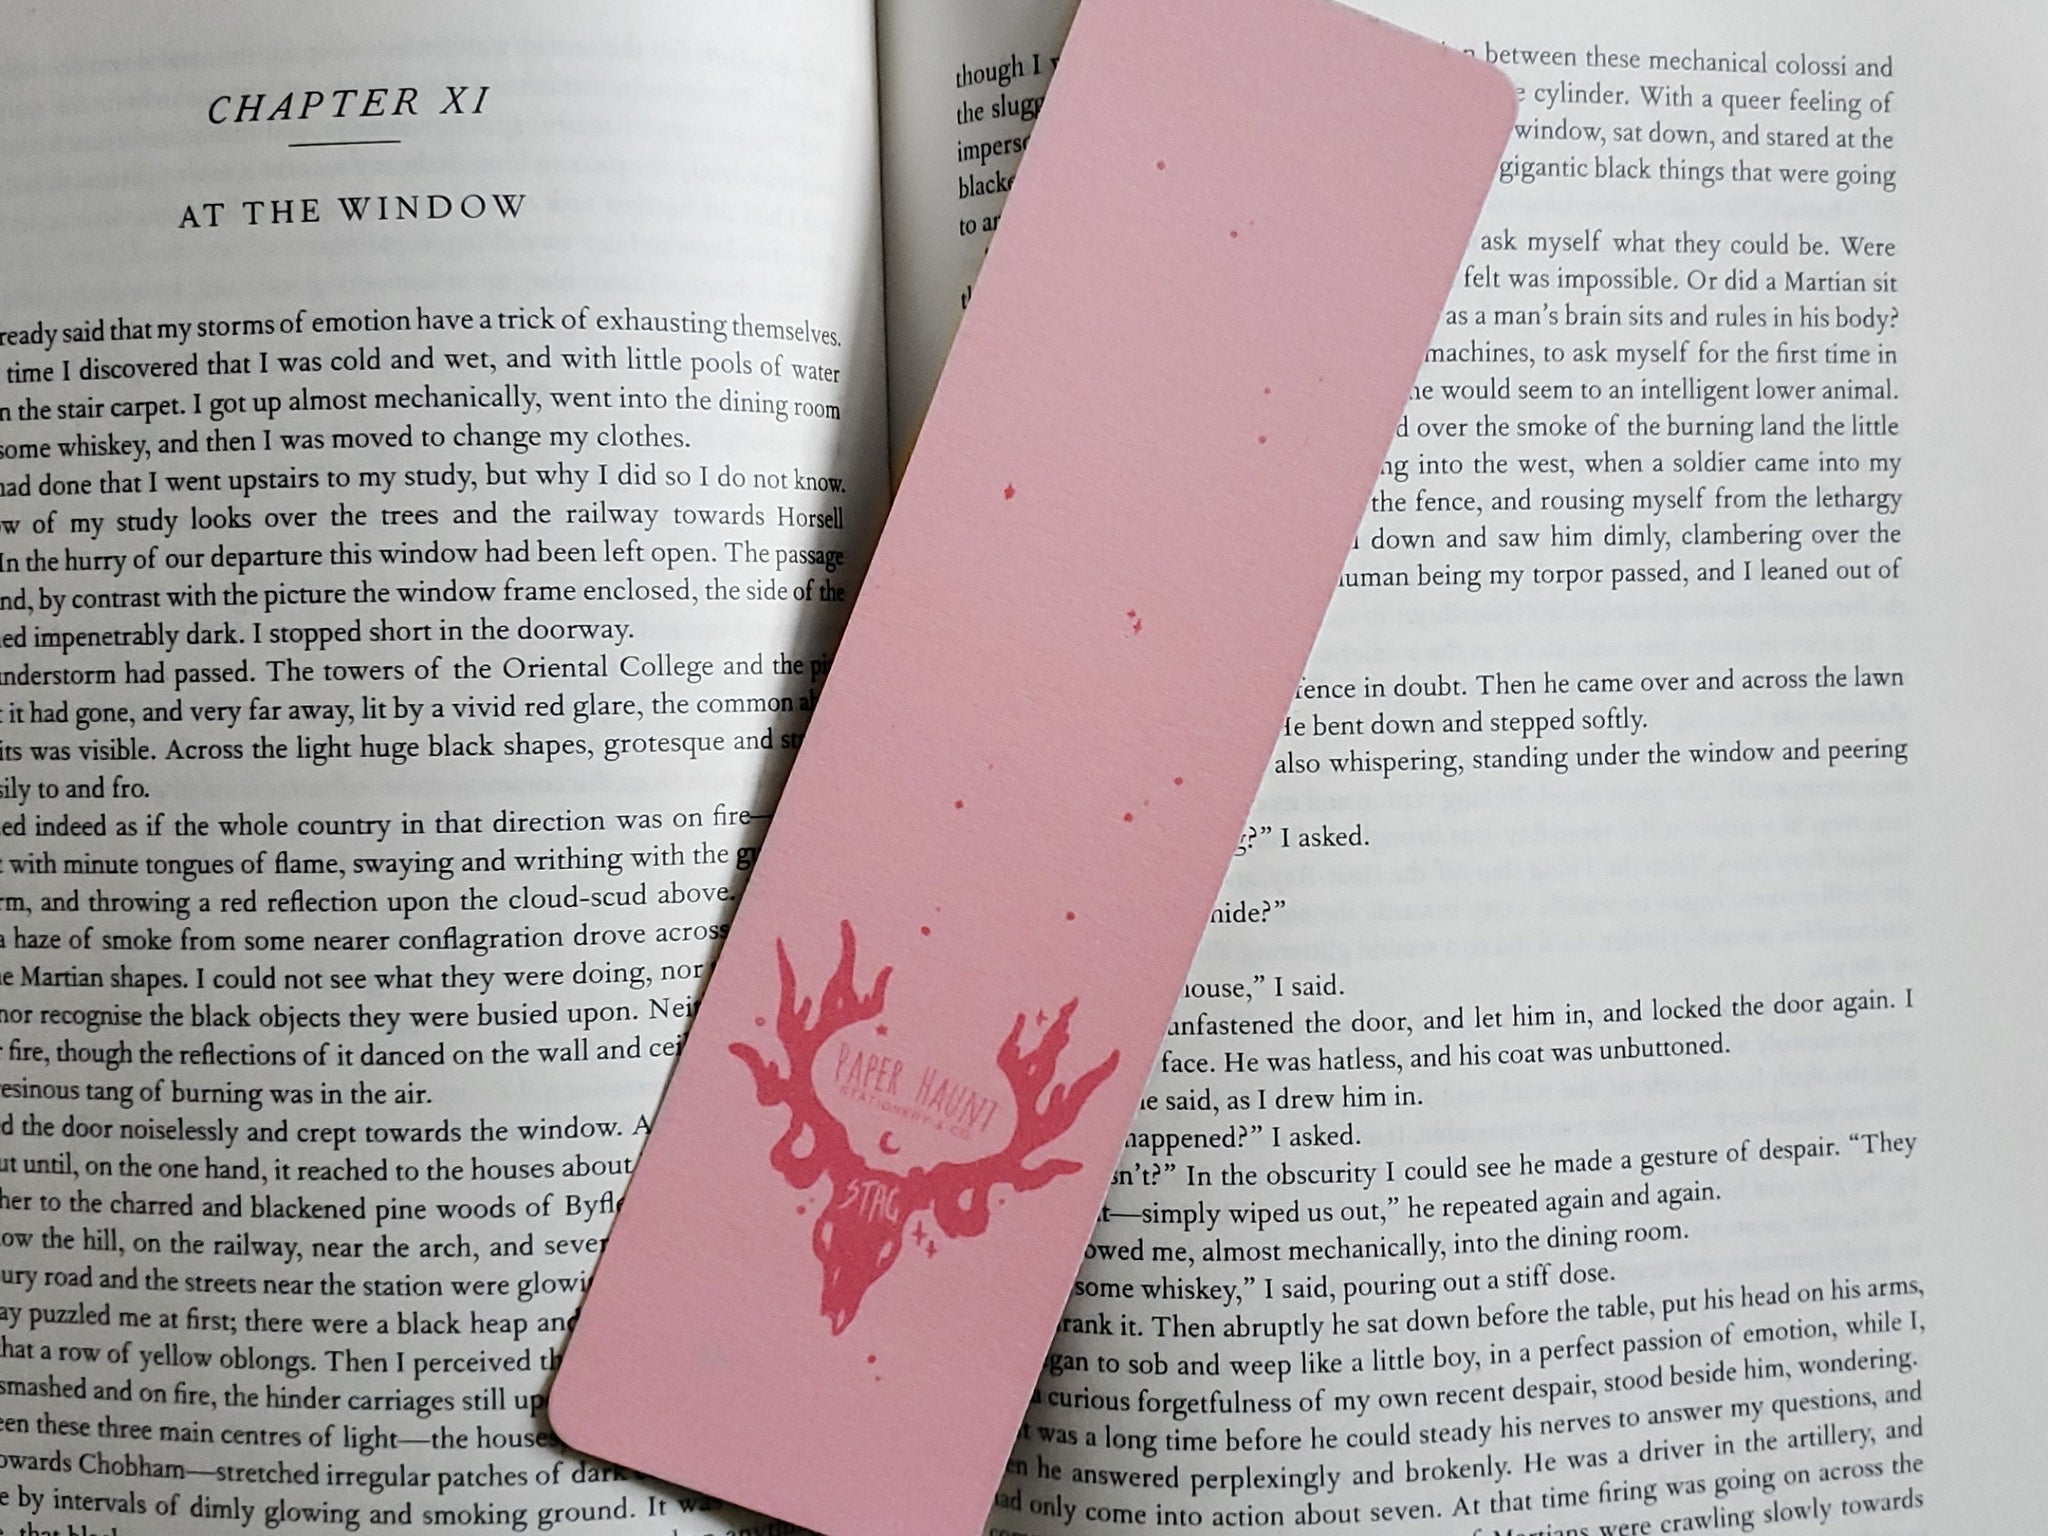 Pink Web Bookmark